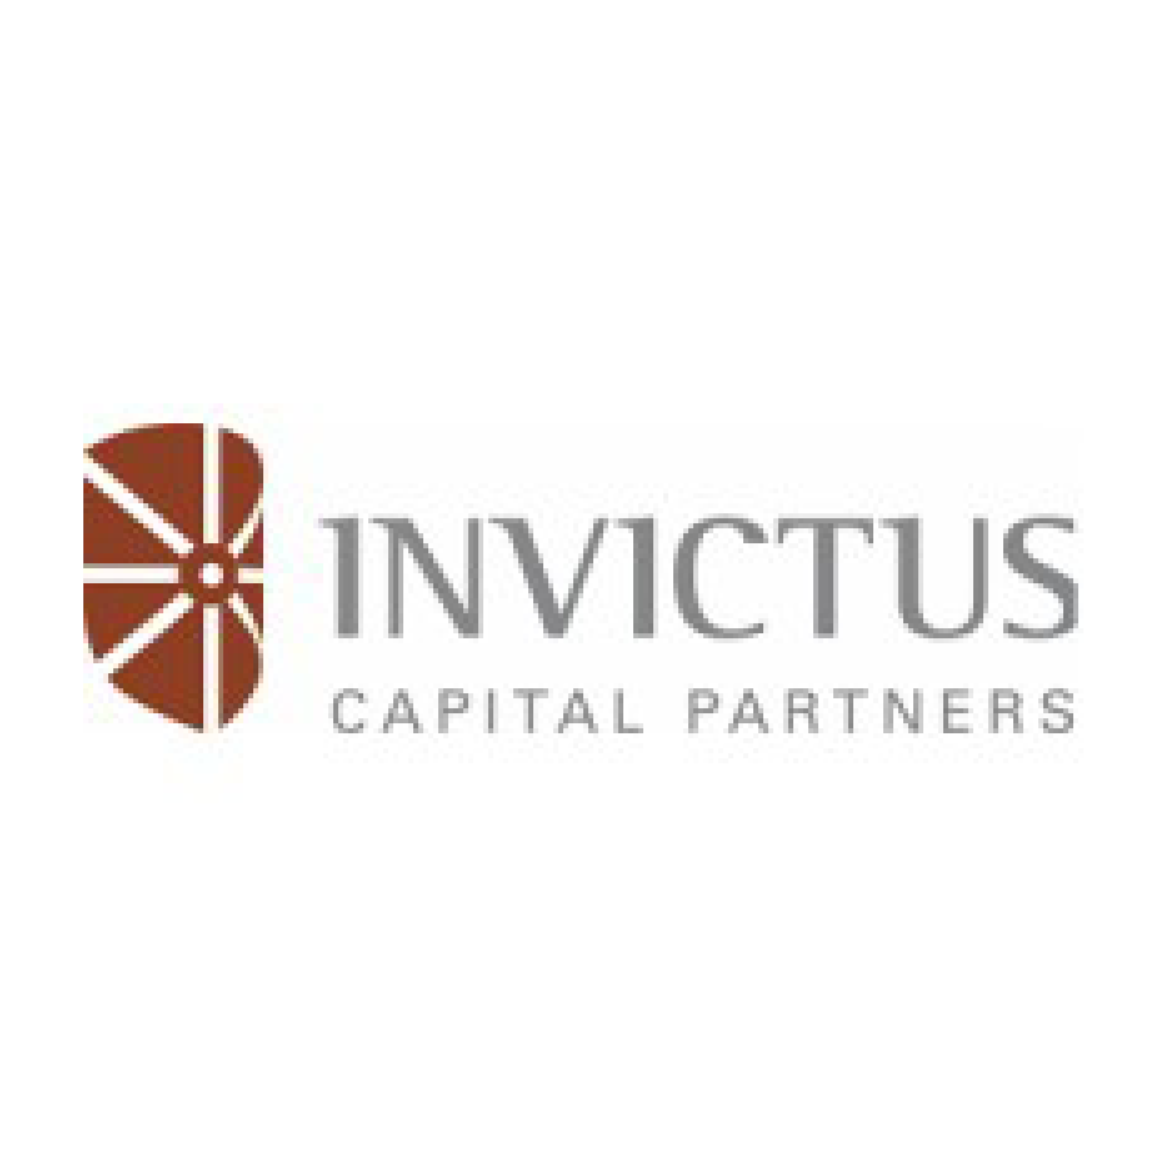 Invictus Capital Partners